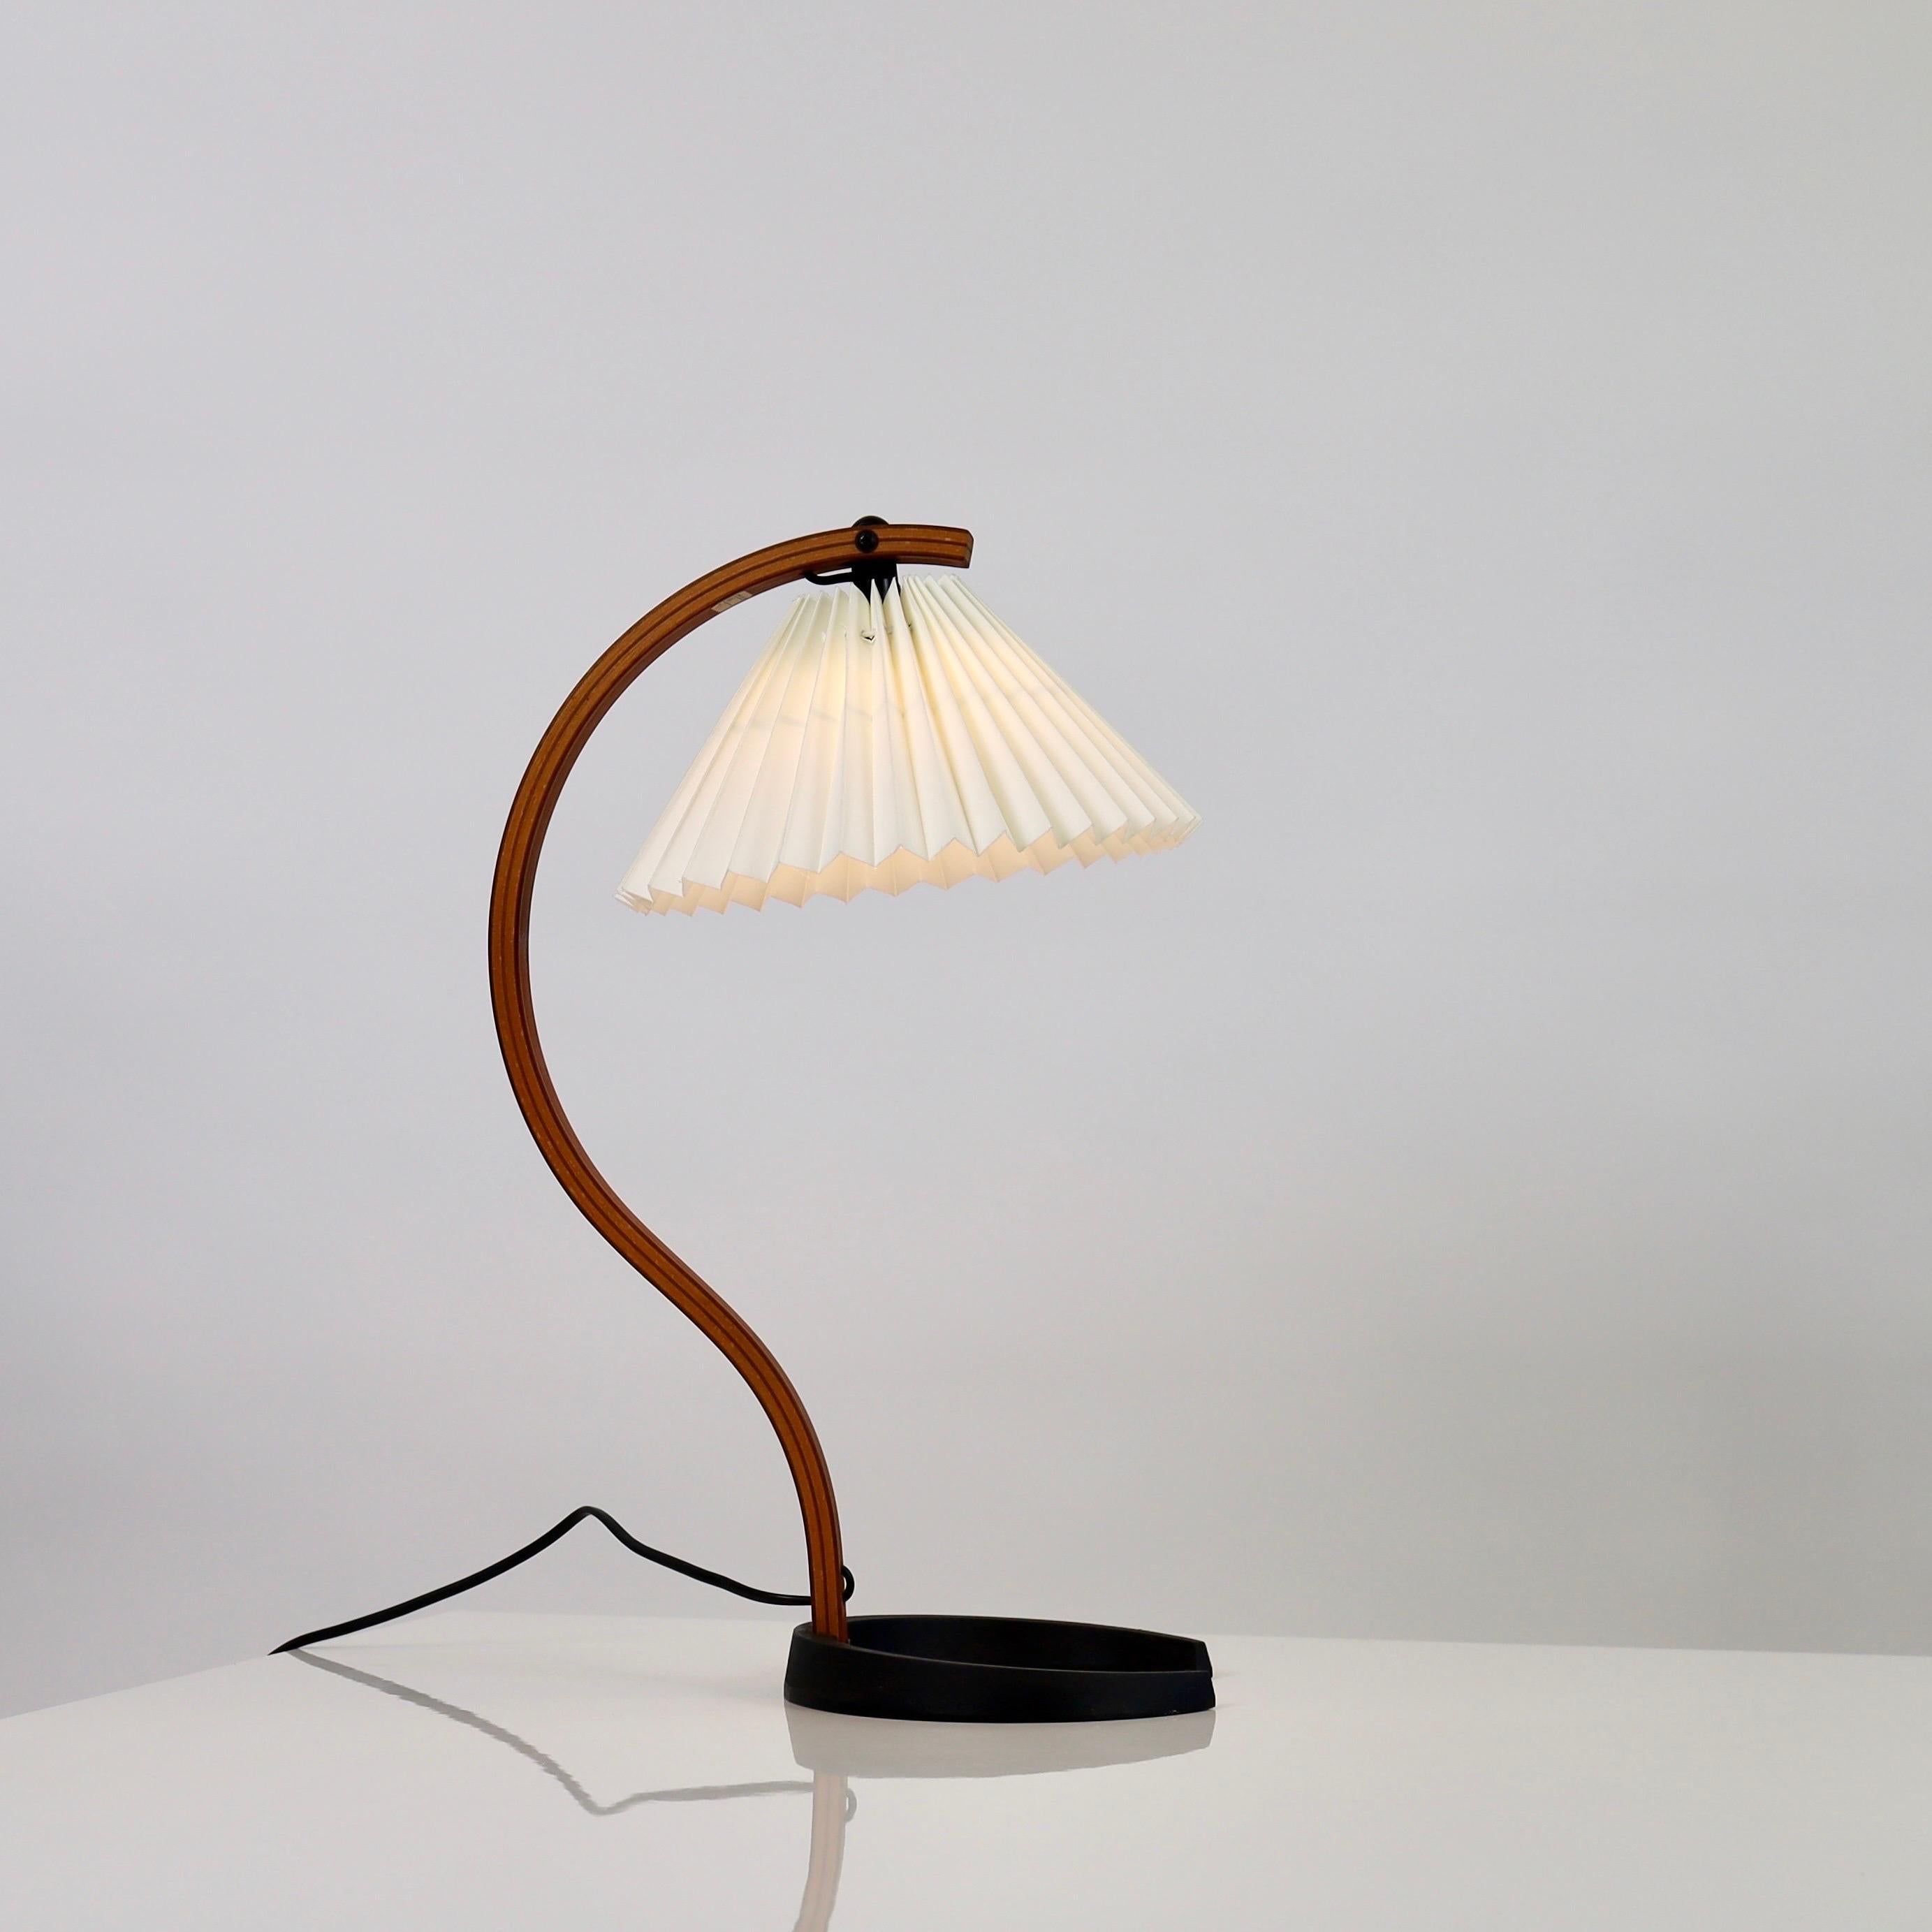 Fin du 20e siècle Lampe de bureau Caprani danoise originale en teck, années 1970, Danemark en vente